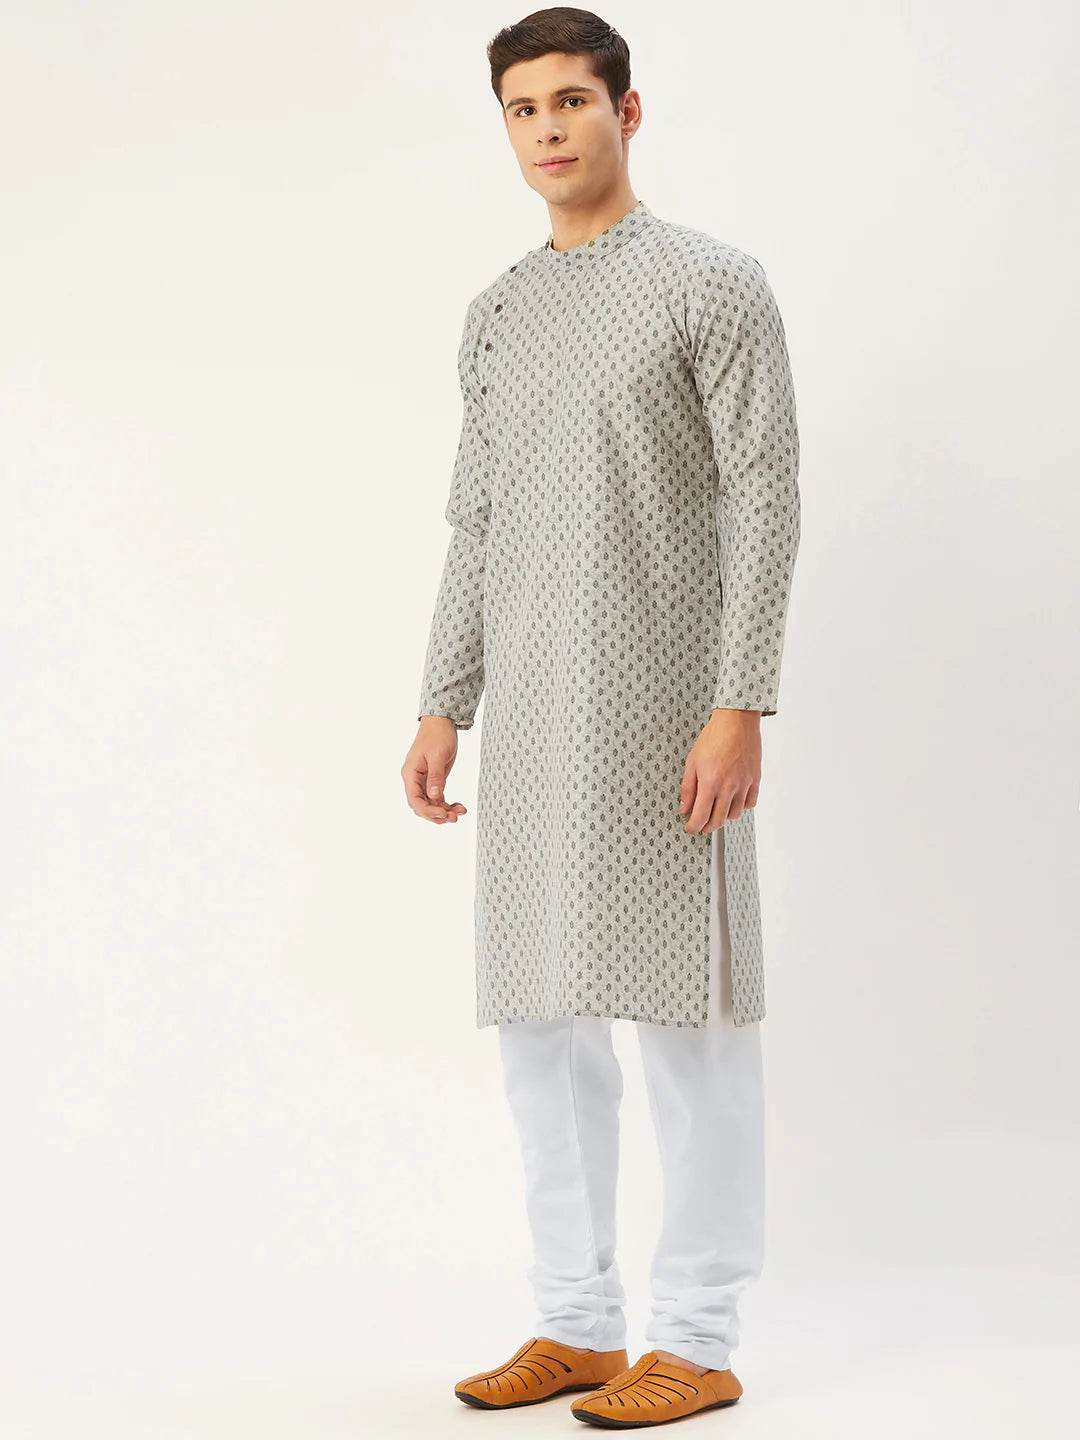 Jompers Men's Grey Cotton printed kurta Pyjama Set ( JOKP 652 Grey )